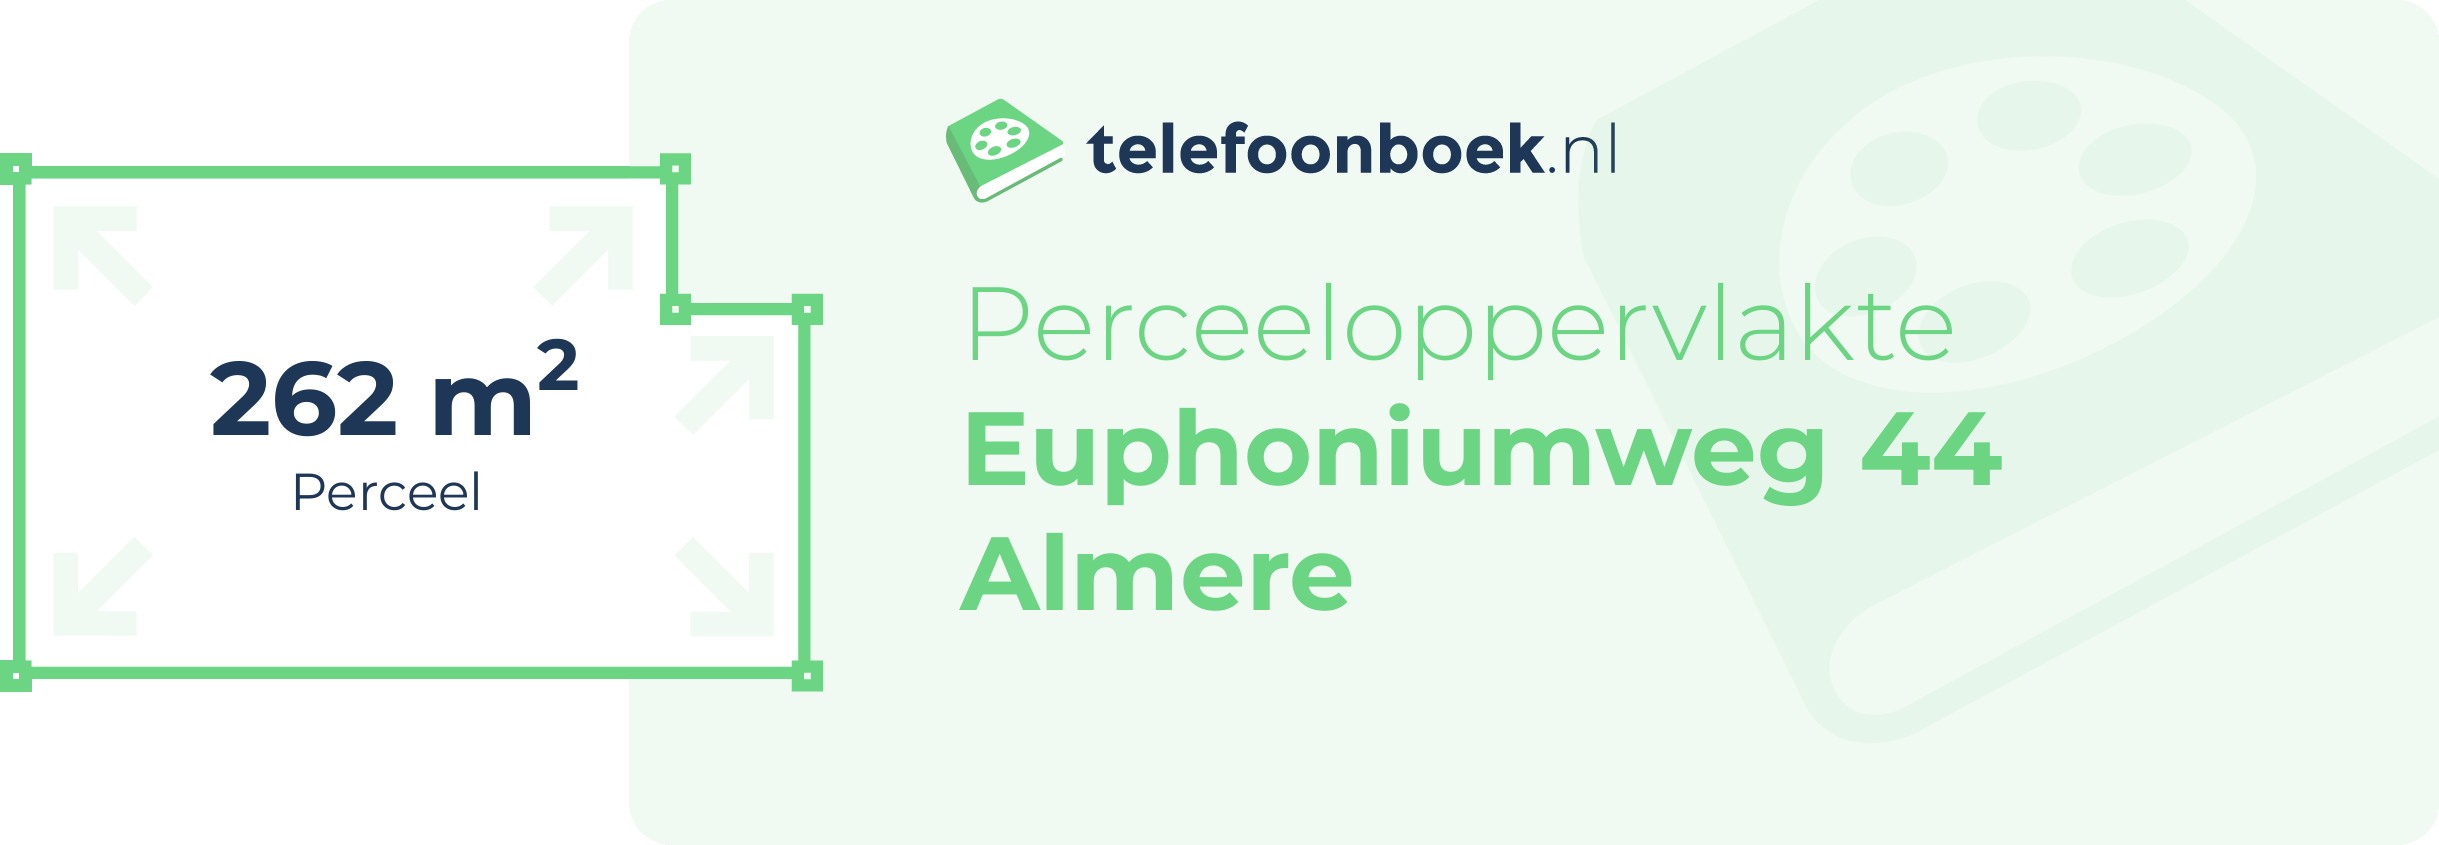 Perceeloppervlakte Euphoniumweg 44 Almere